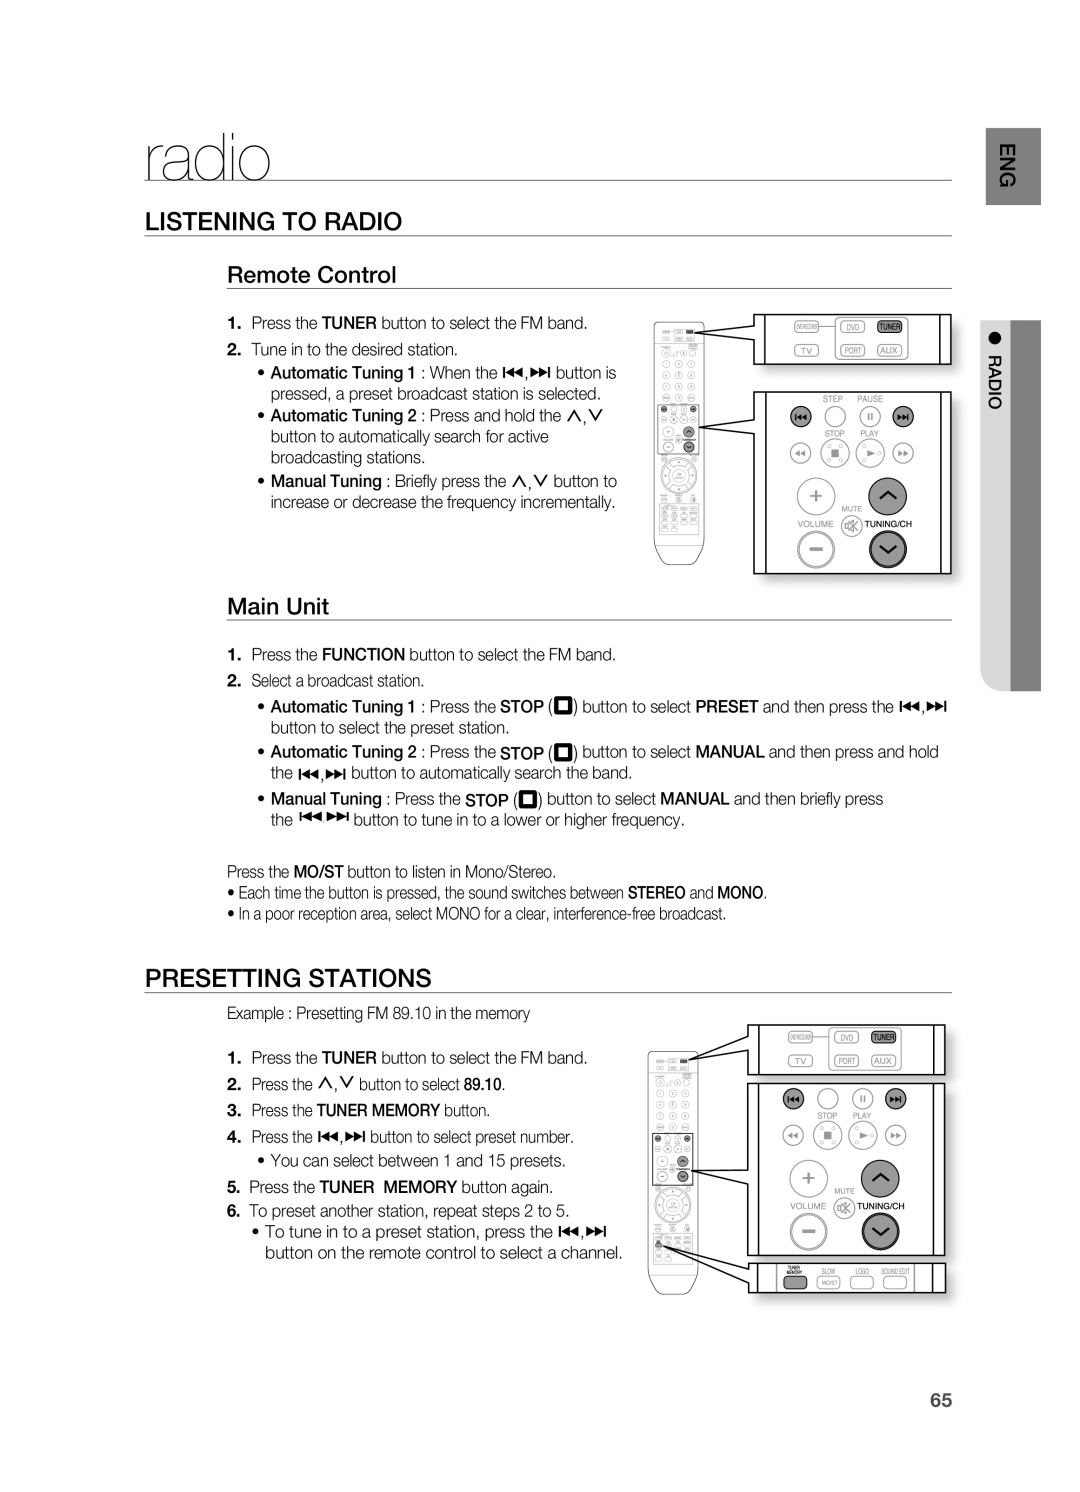 Samsung HT-TZ515 user manual radio, LISTENINg TO rADIO, PrESETTINg STATIONS 